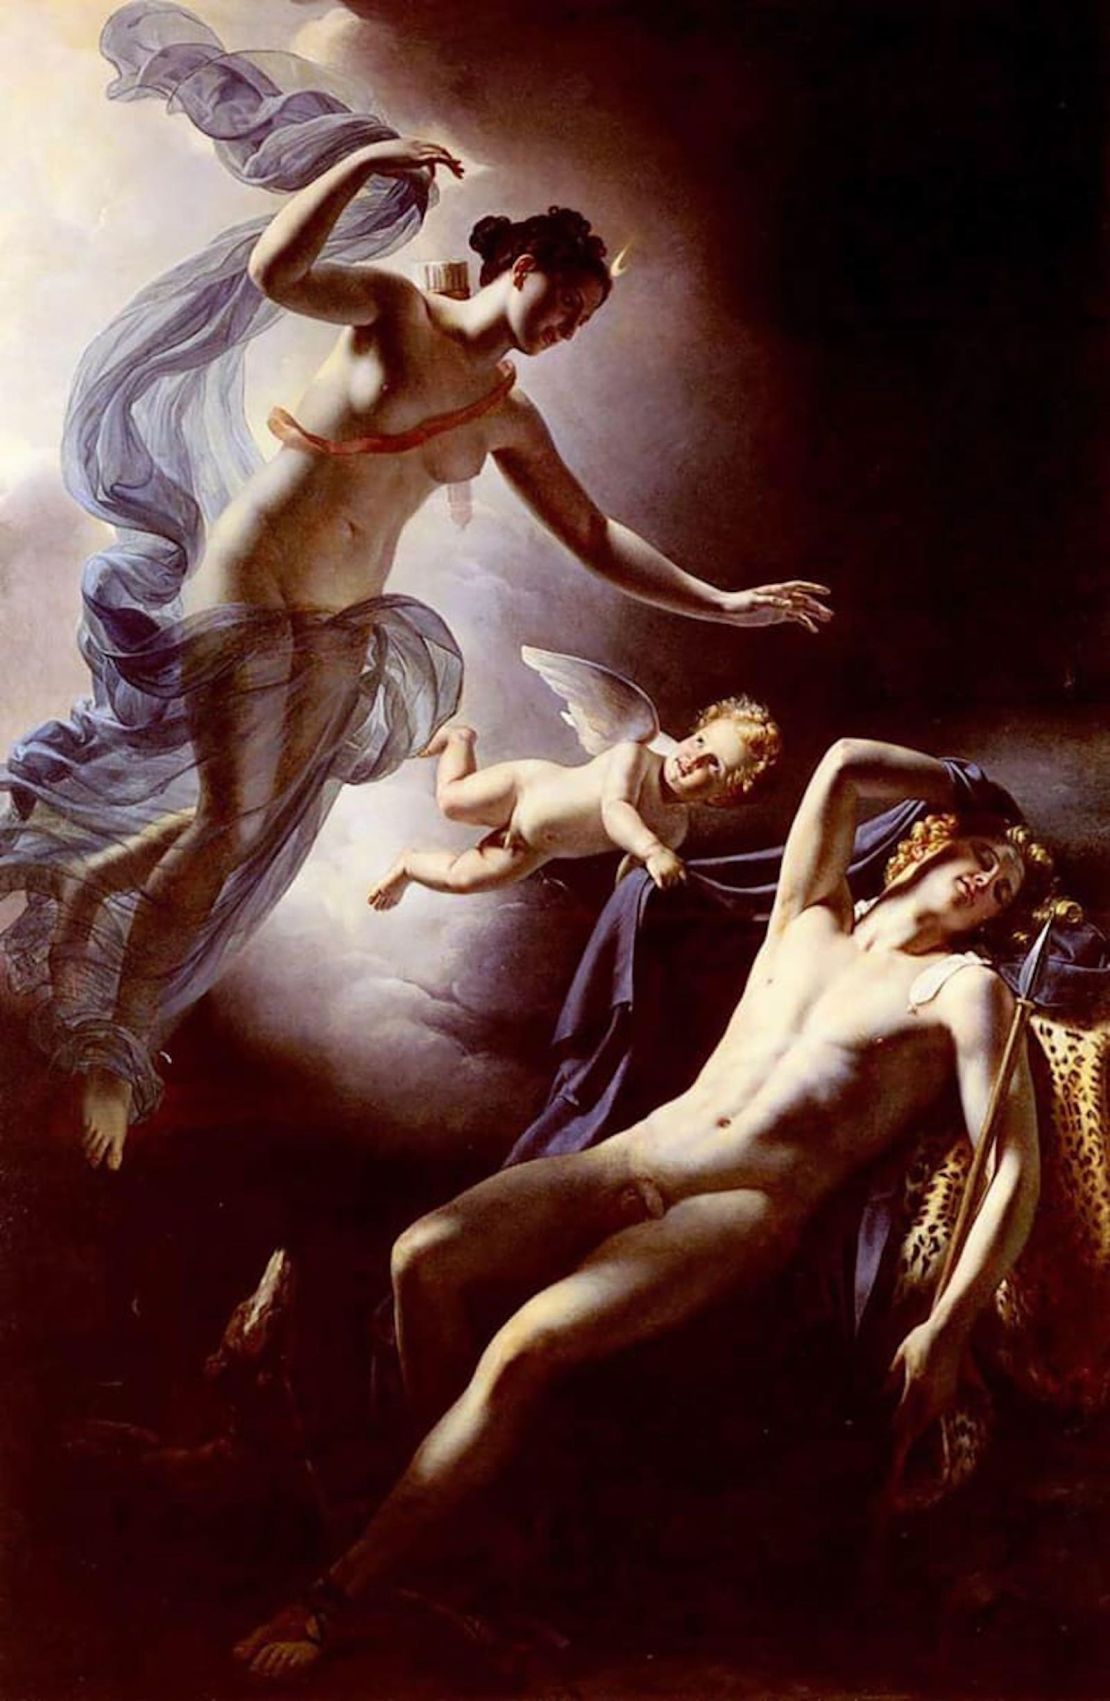 "Diana and Endymion", de Jérôme-Martin Langlois, muestra a la diosa romana Diana enamorándose de Endymion, un símbolo de belleza atemporal.